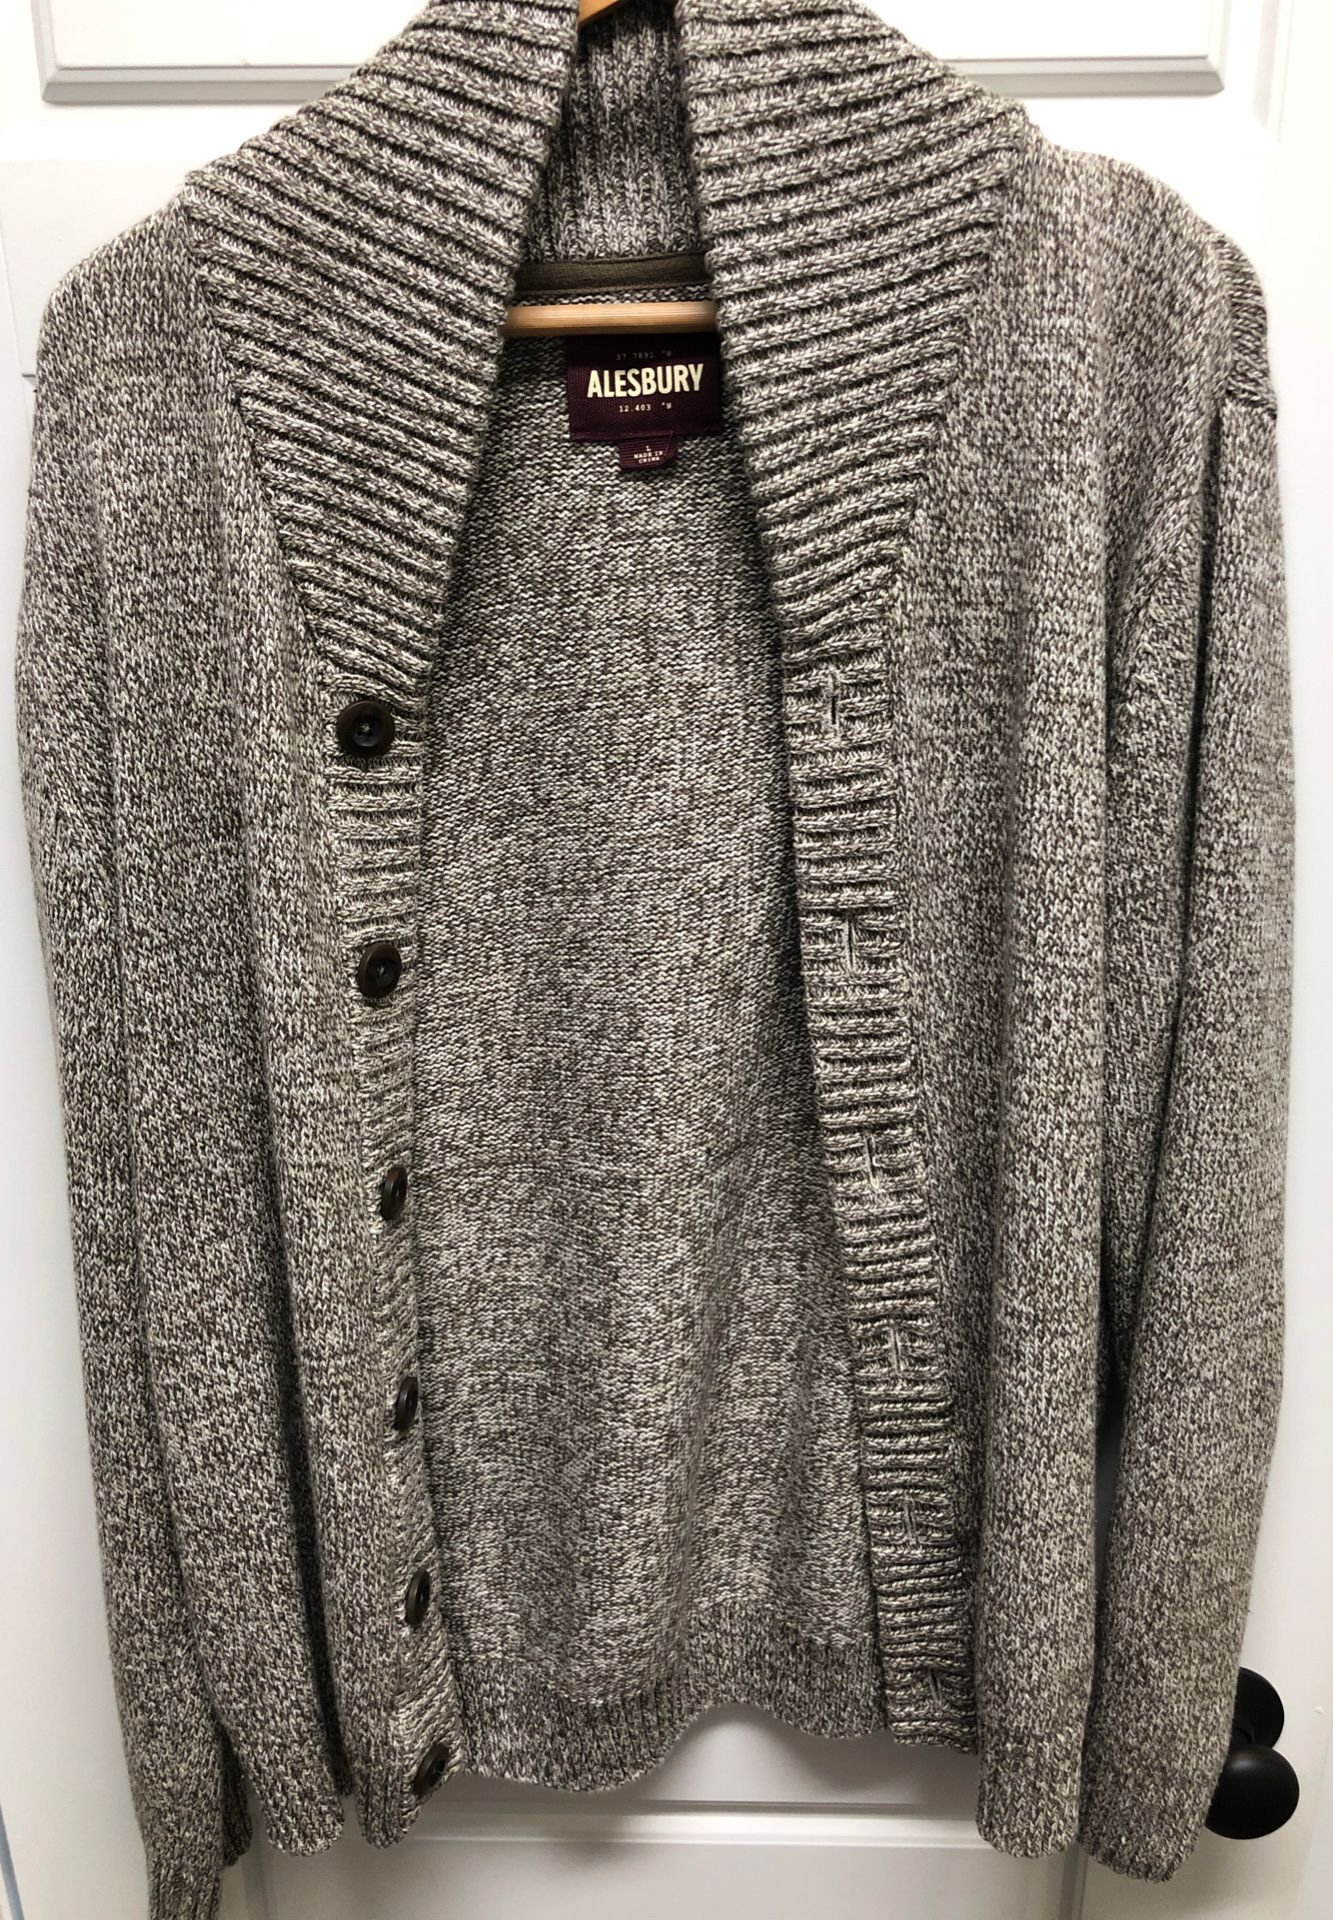 Alesbury Mens Large Sweater Jacket Grey